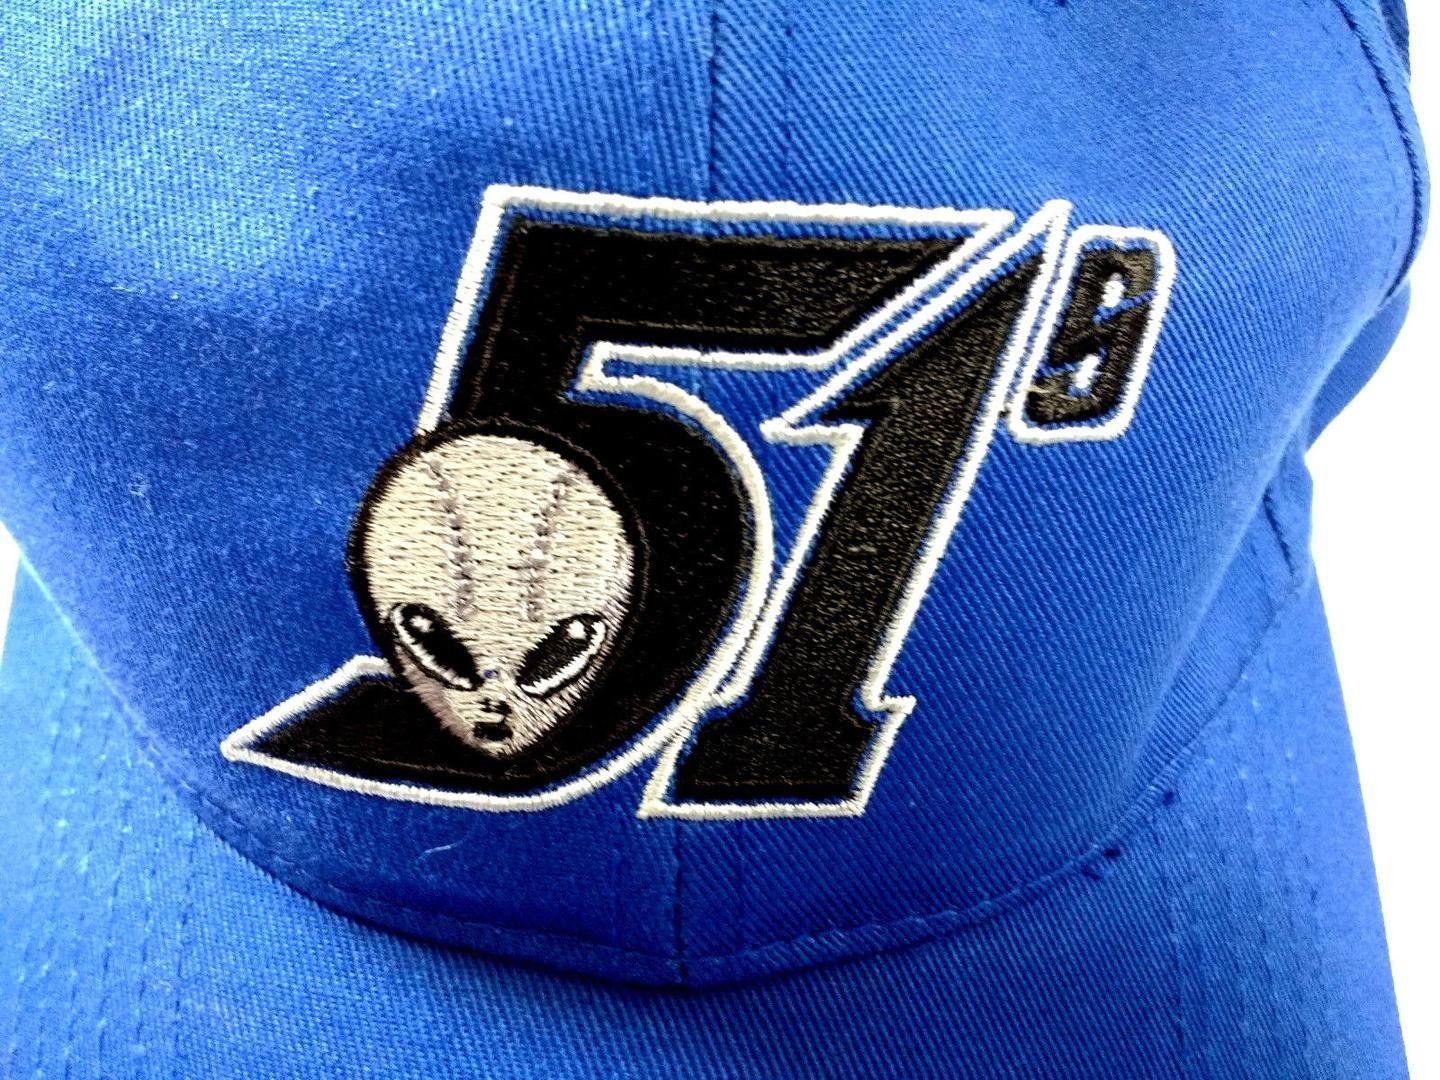 Las Vegas 51s Logo - Las Vegas 51s Minor League Baseball Team Hat Blue with Alien Logo ...